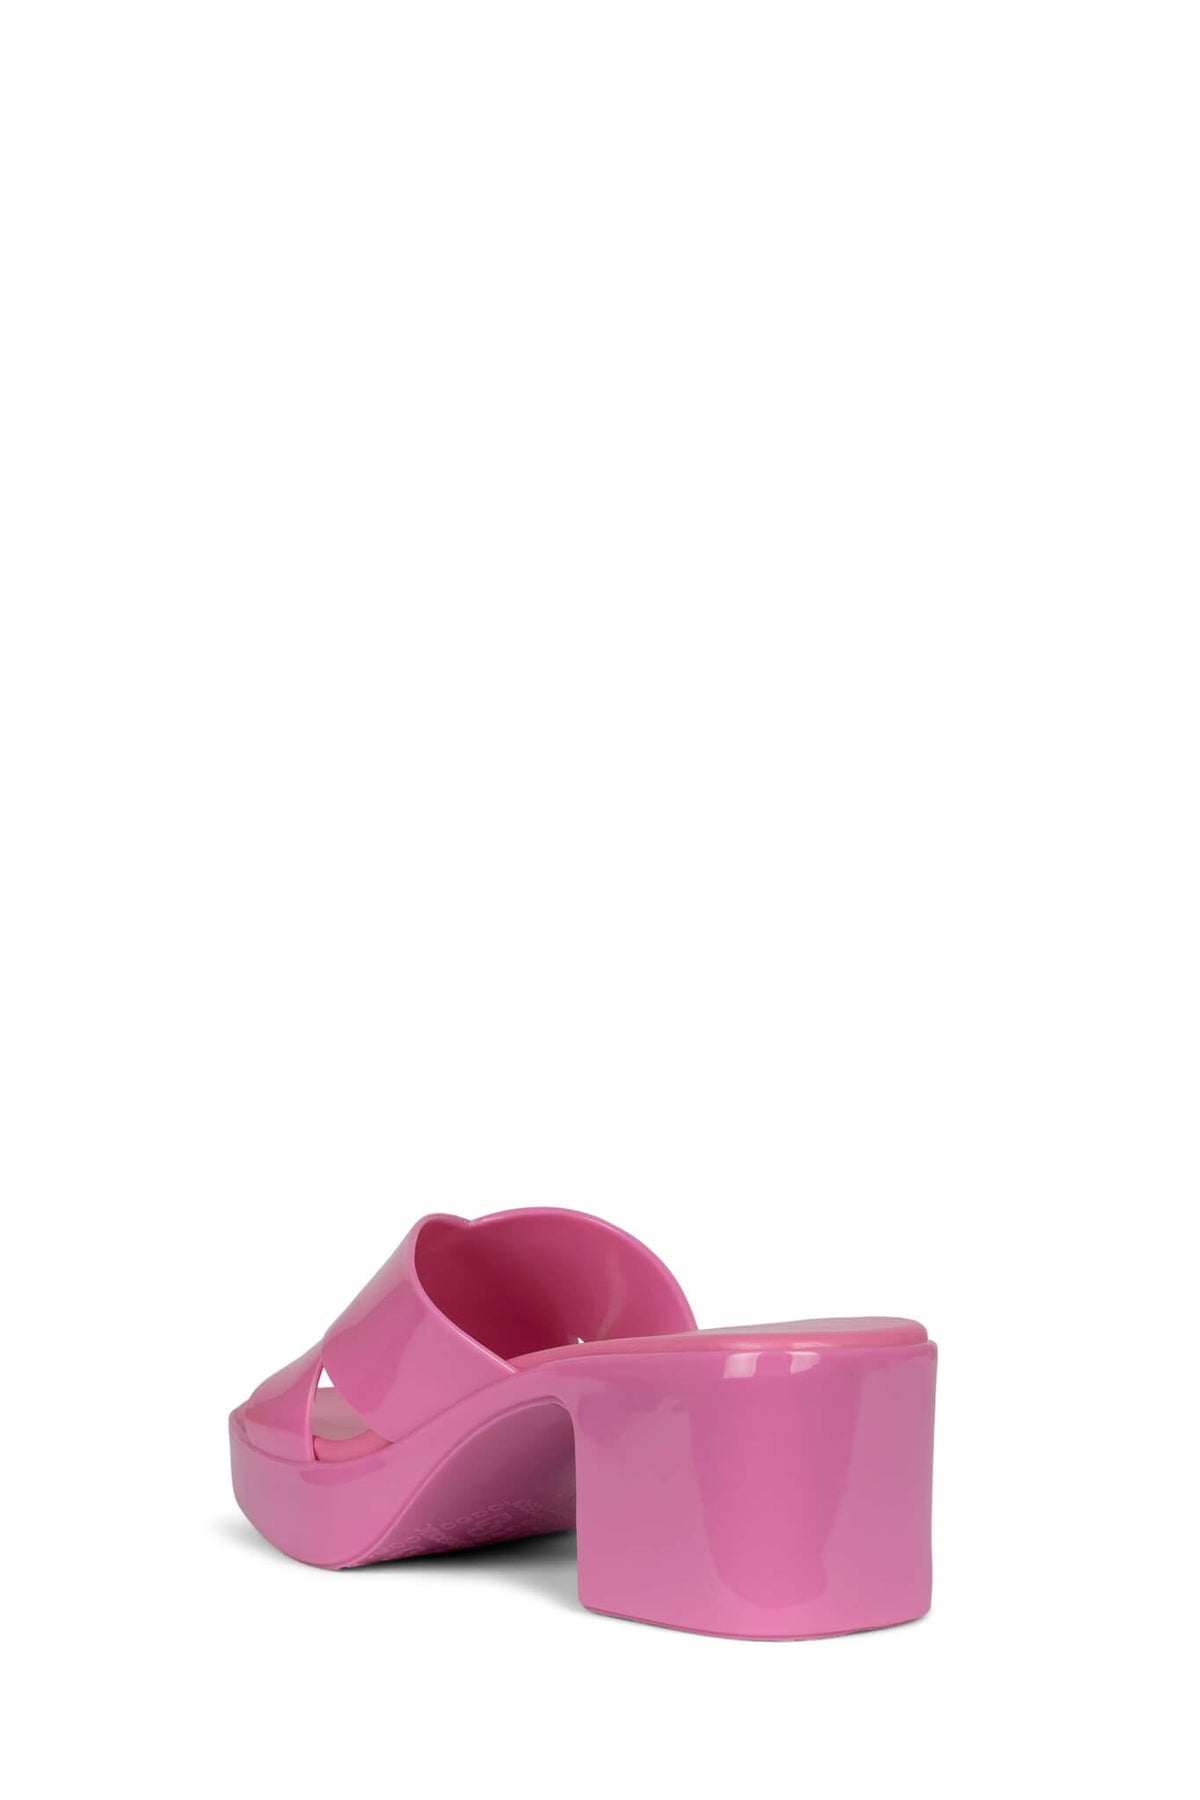 BUBBLEGUM Jeffrey Campbell Jelly Platform Sandals Bright Pink Shiny